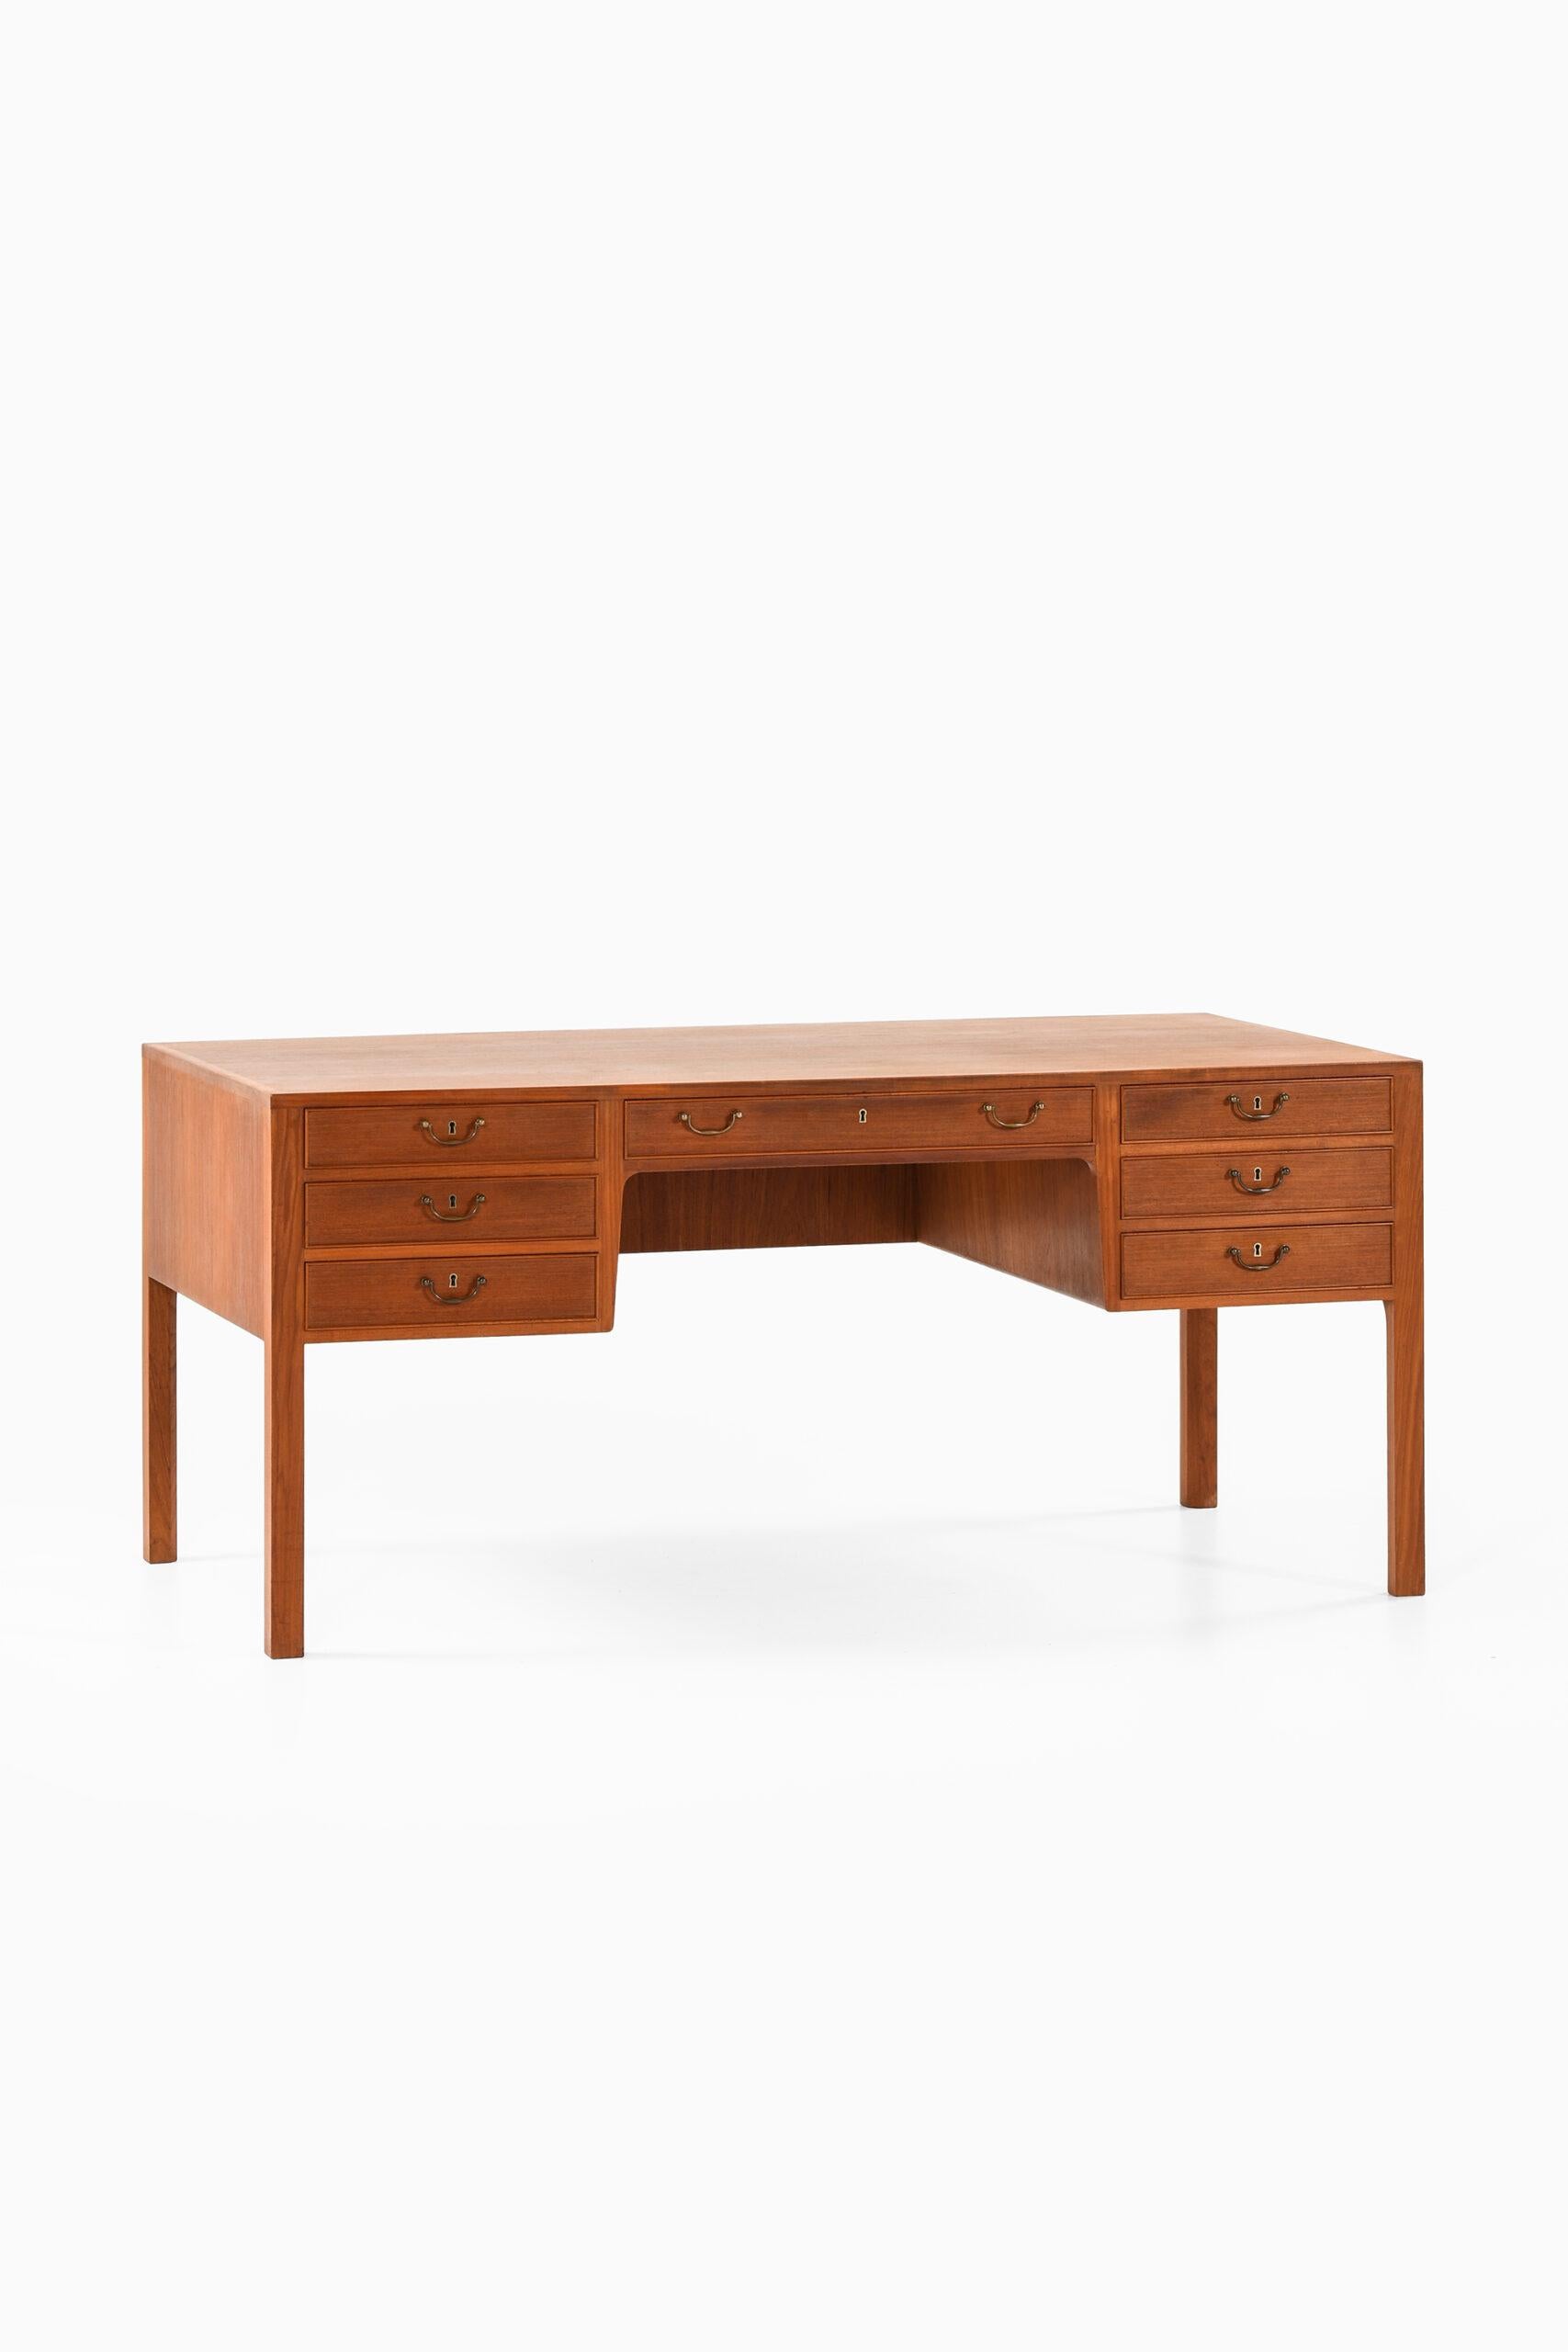 Mid-20th Century Ole Wanscher Desk Produced by Cabinetmaker A.J. Iversen in Denmark